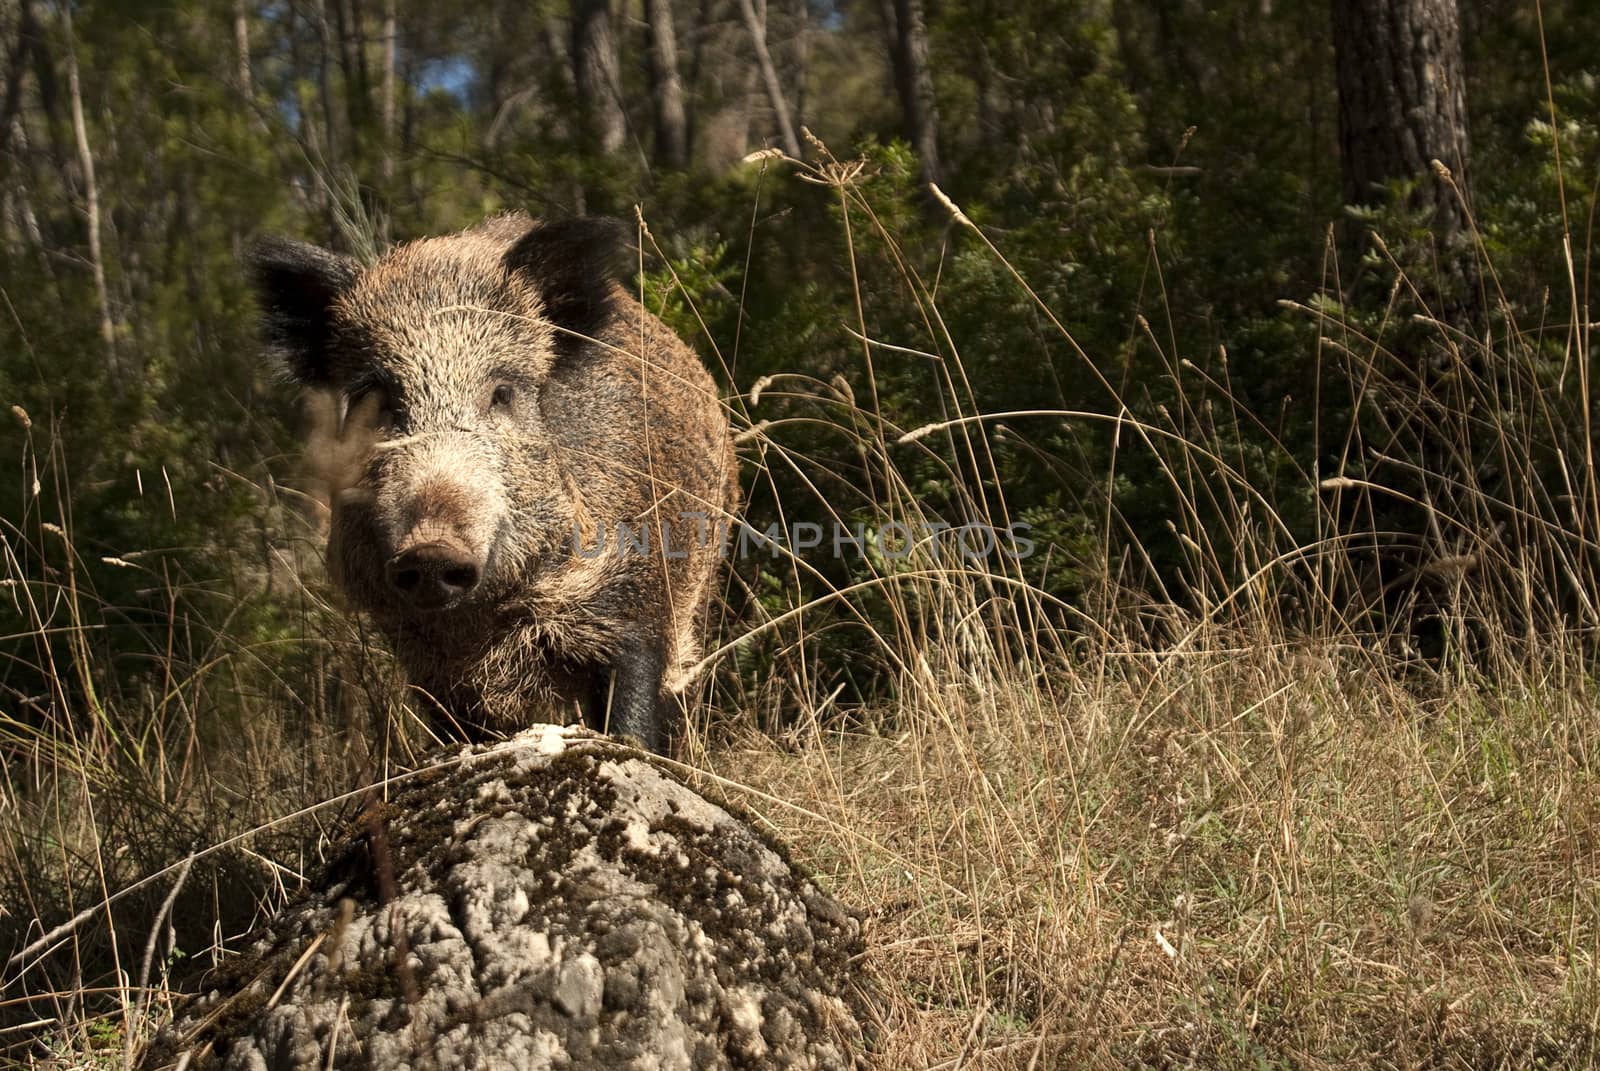 wild boar, sus scrofa, spain by jalonsohu@gmail.com